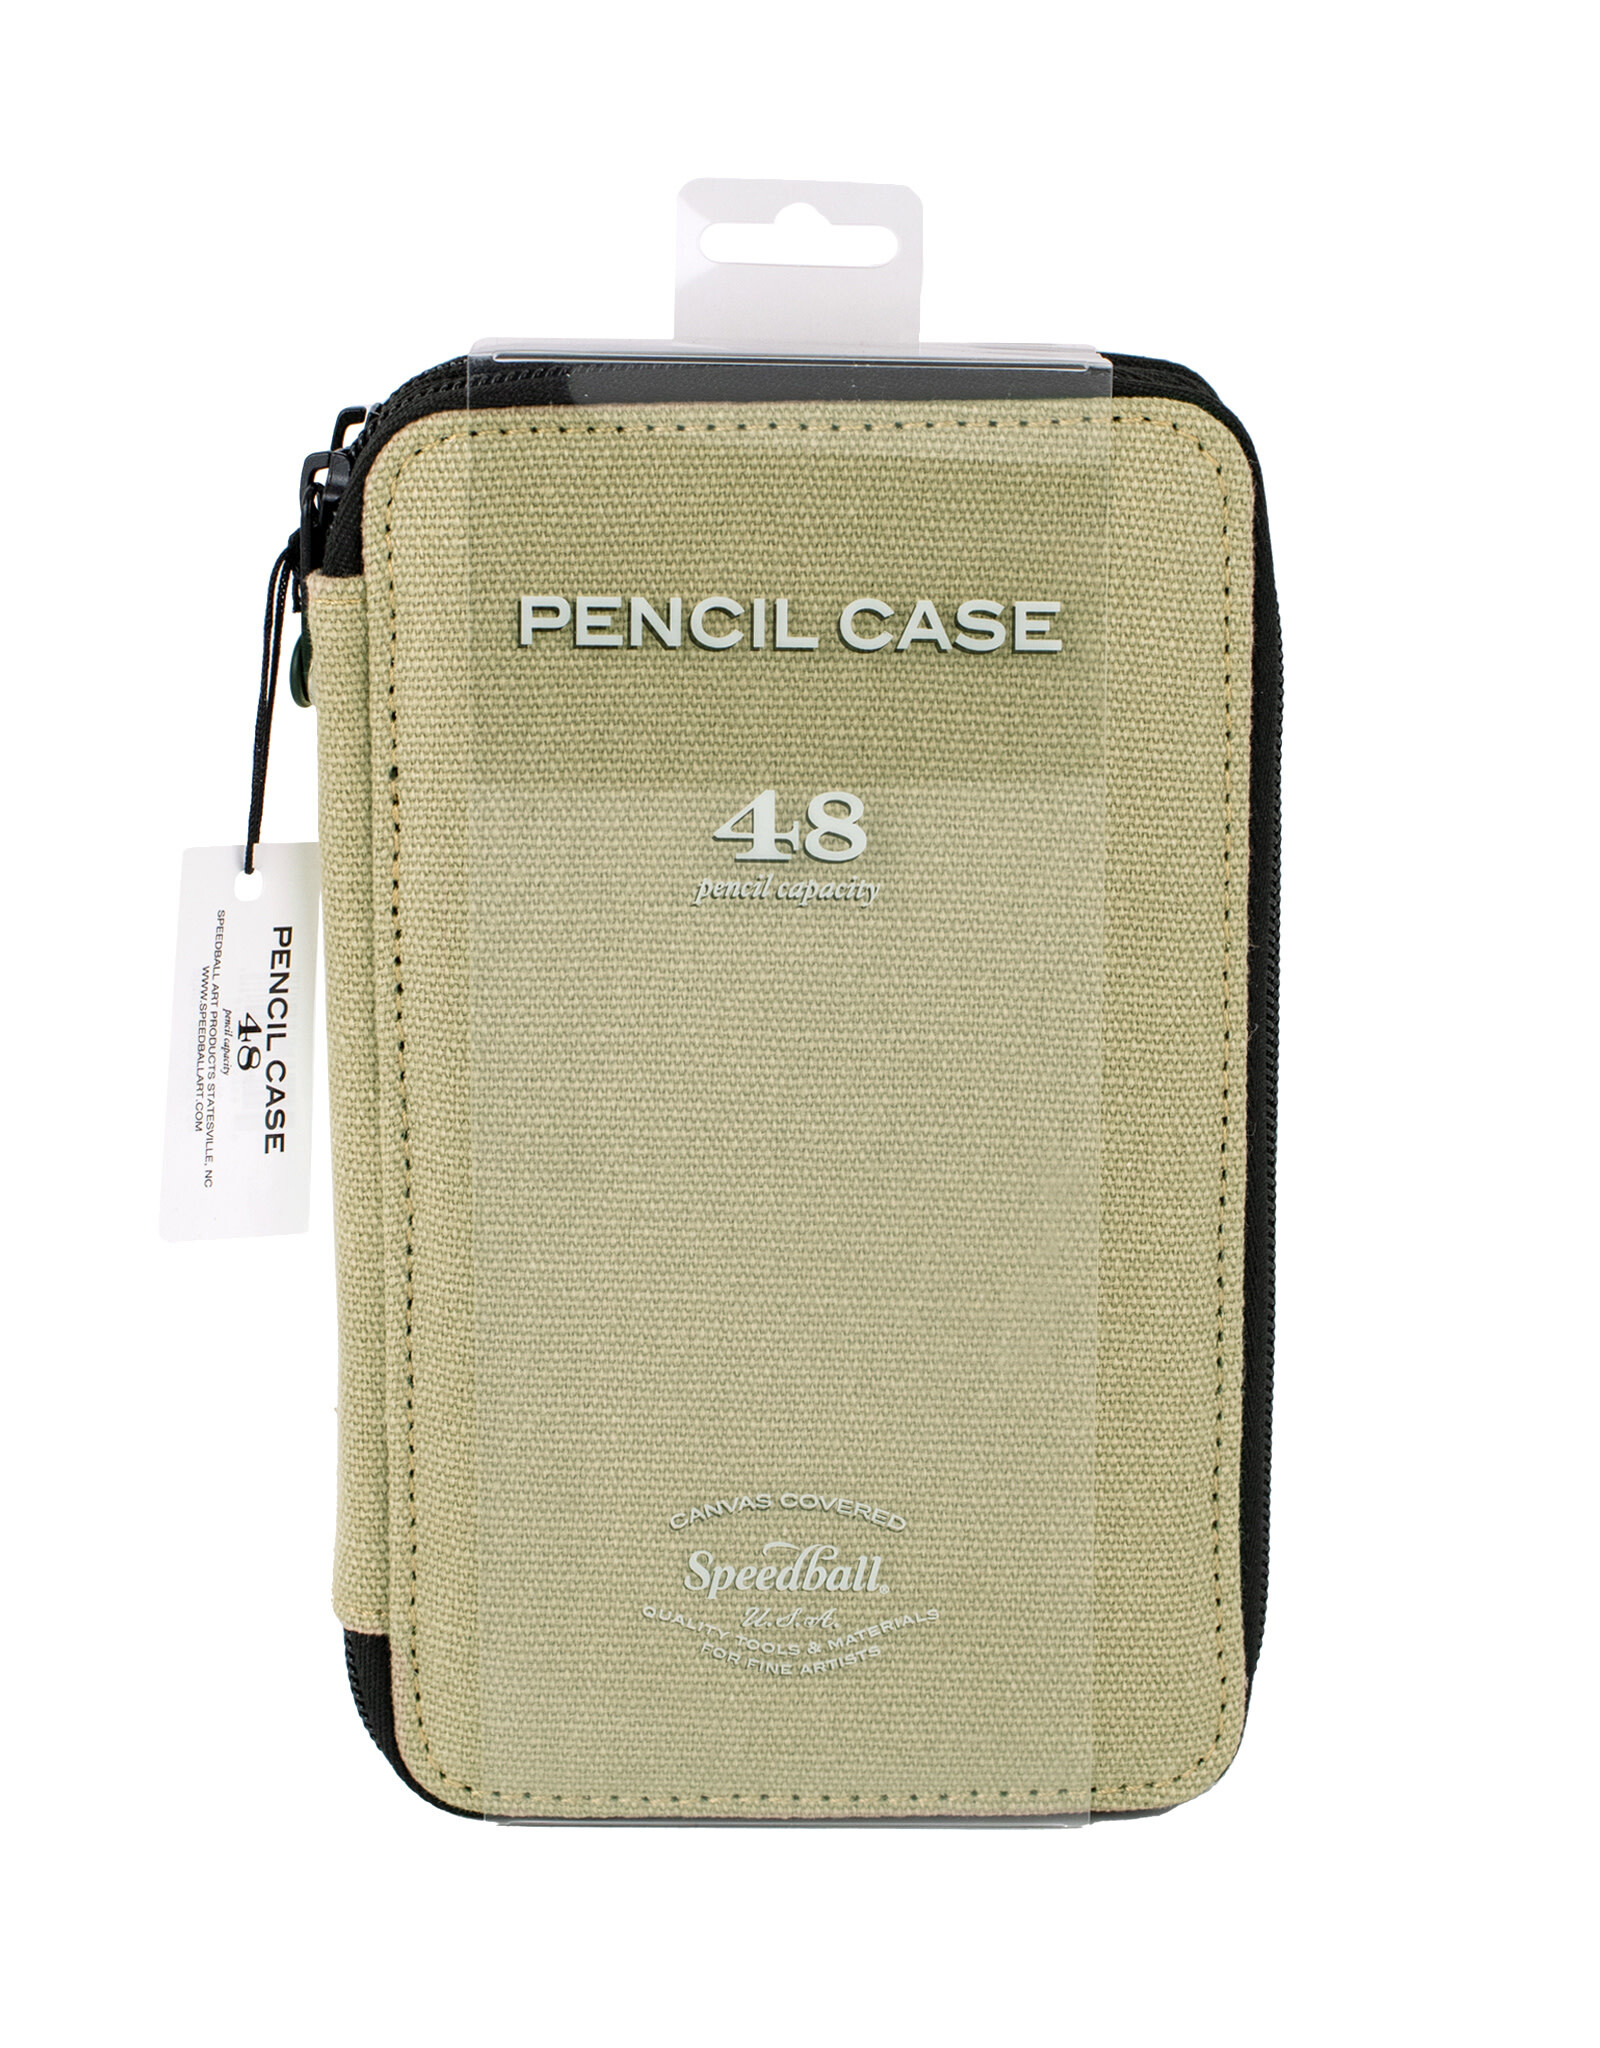 Global Art Pencil Case, Woven Canvas, Sage, 48 Pencils - The Art  Store/Commercial Art Supply